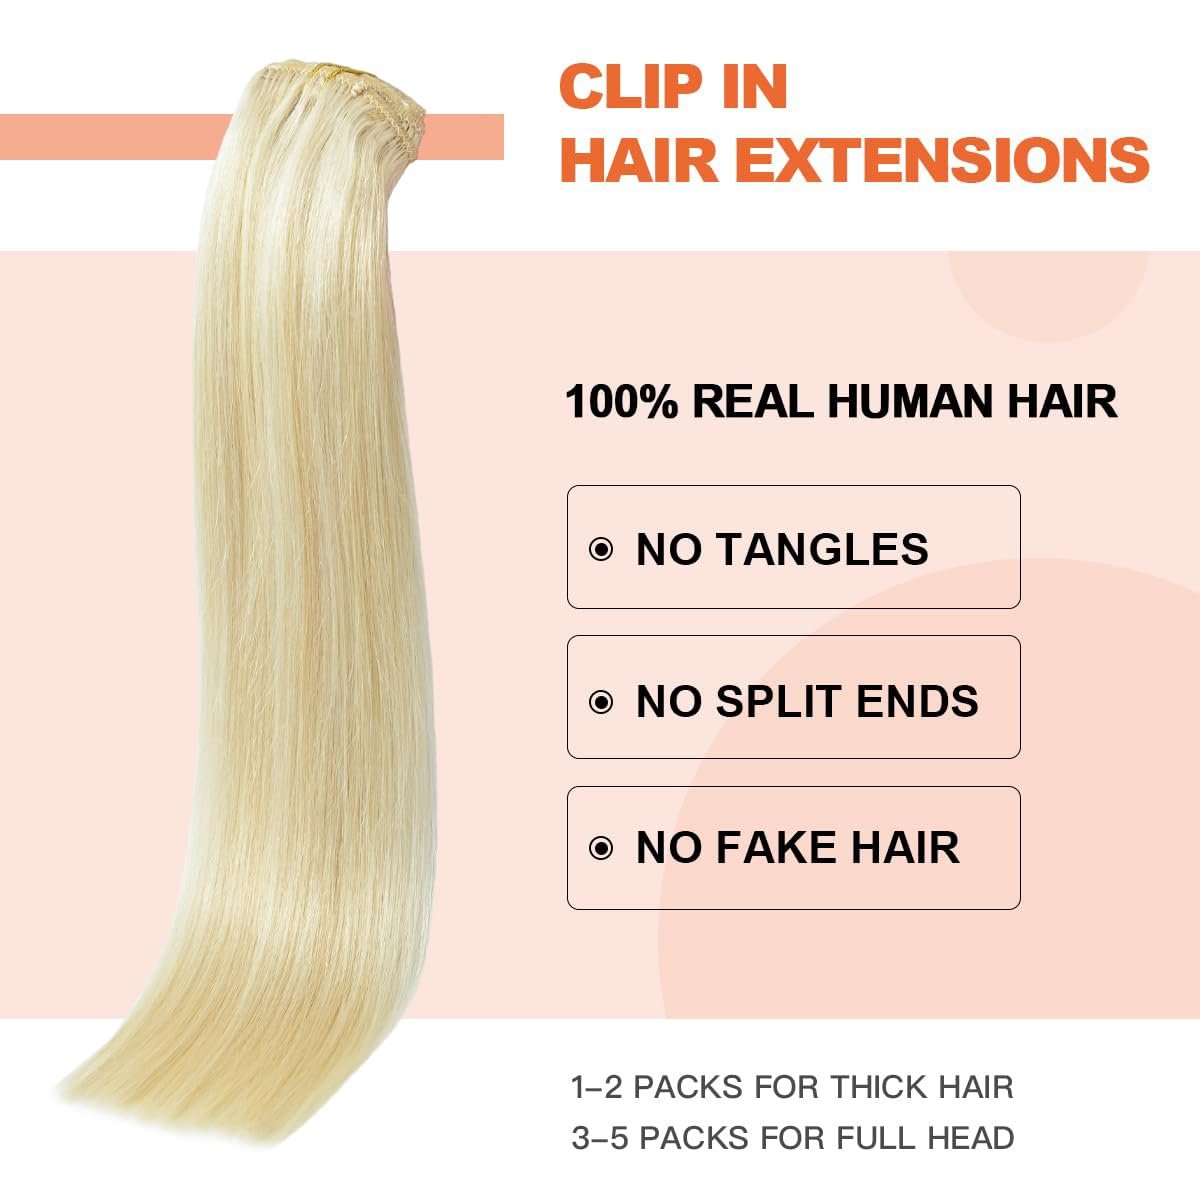 Platinum Blonde Hair Extensions Real Human Hair Review